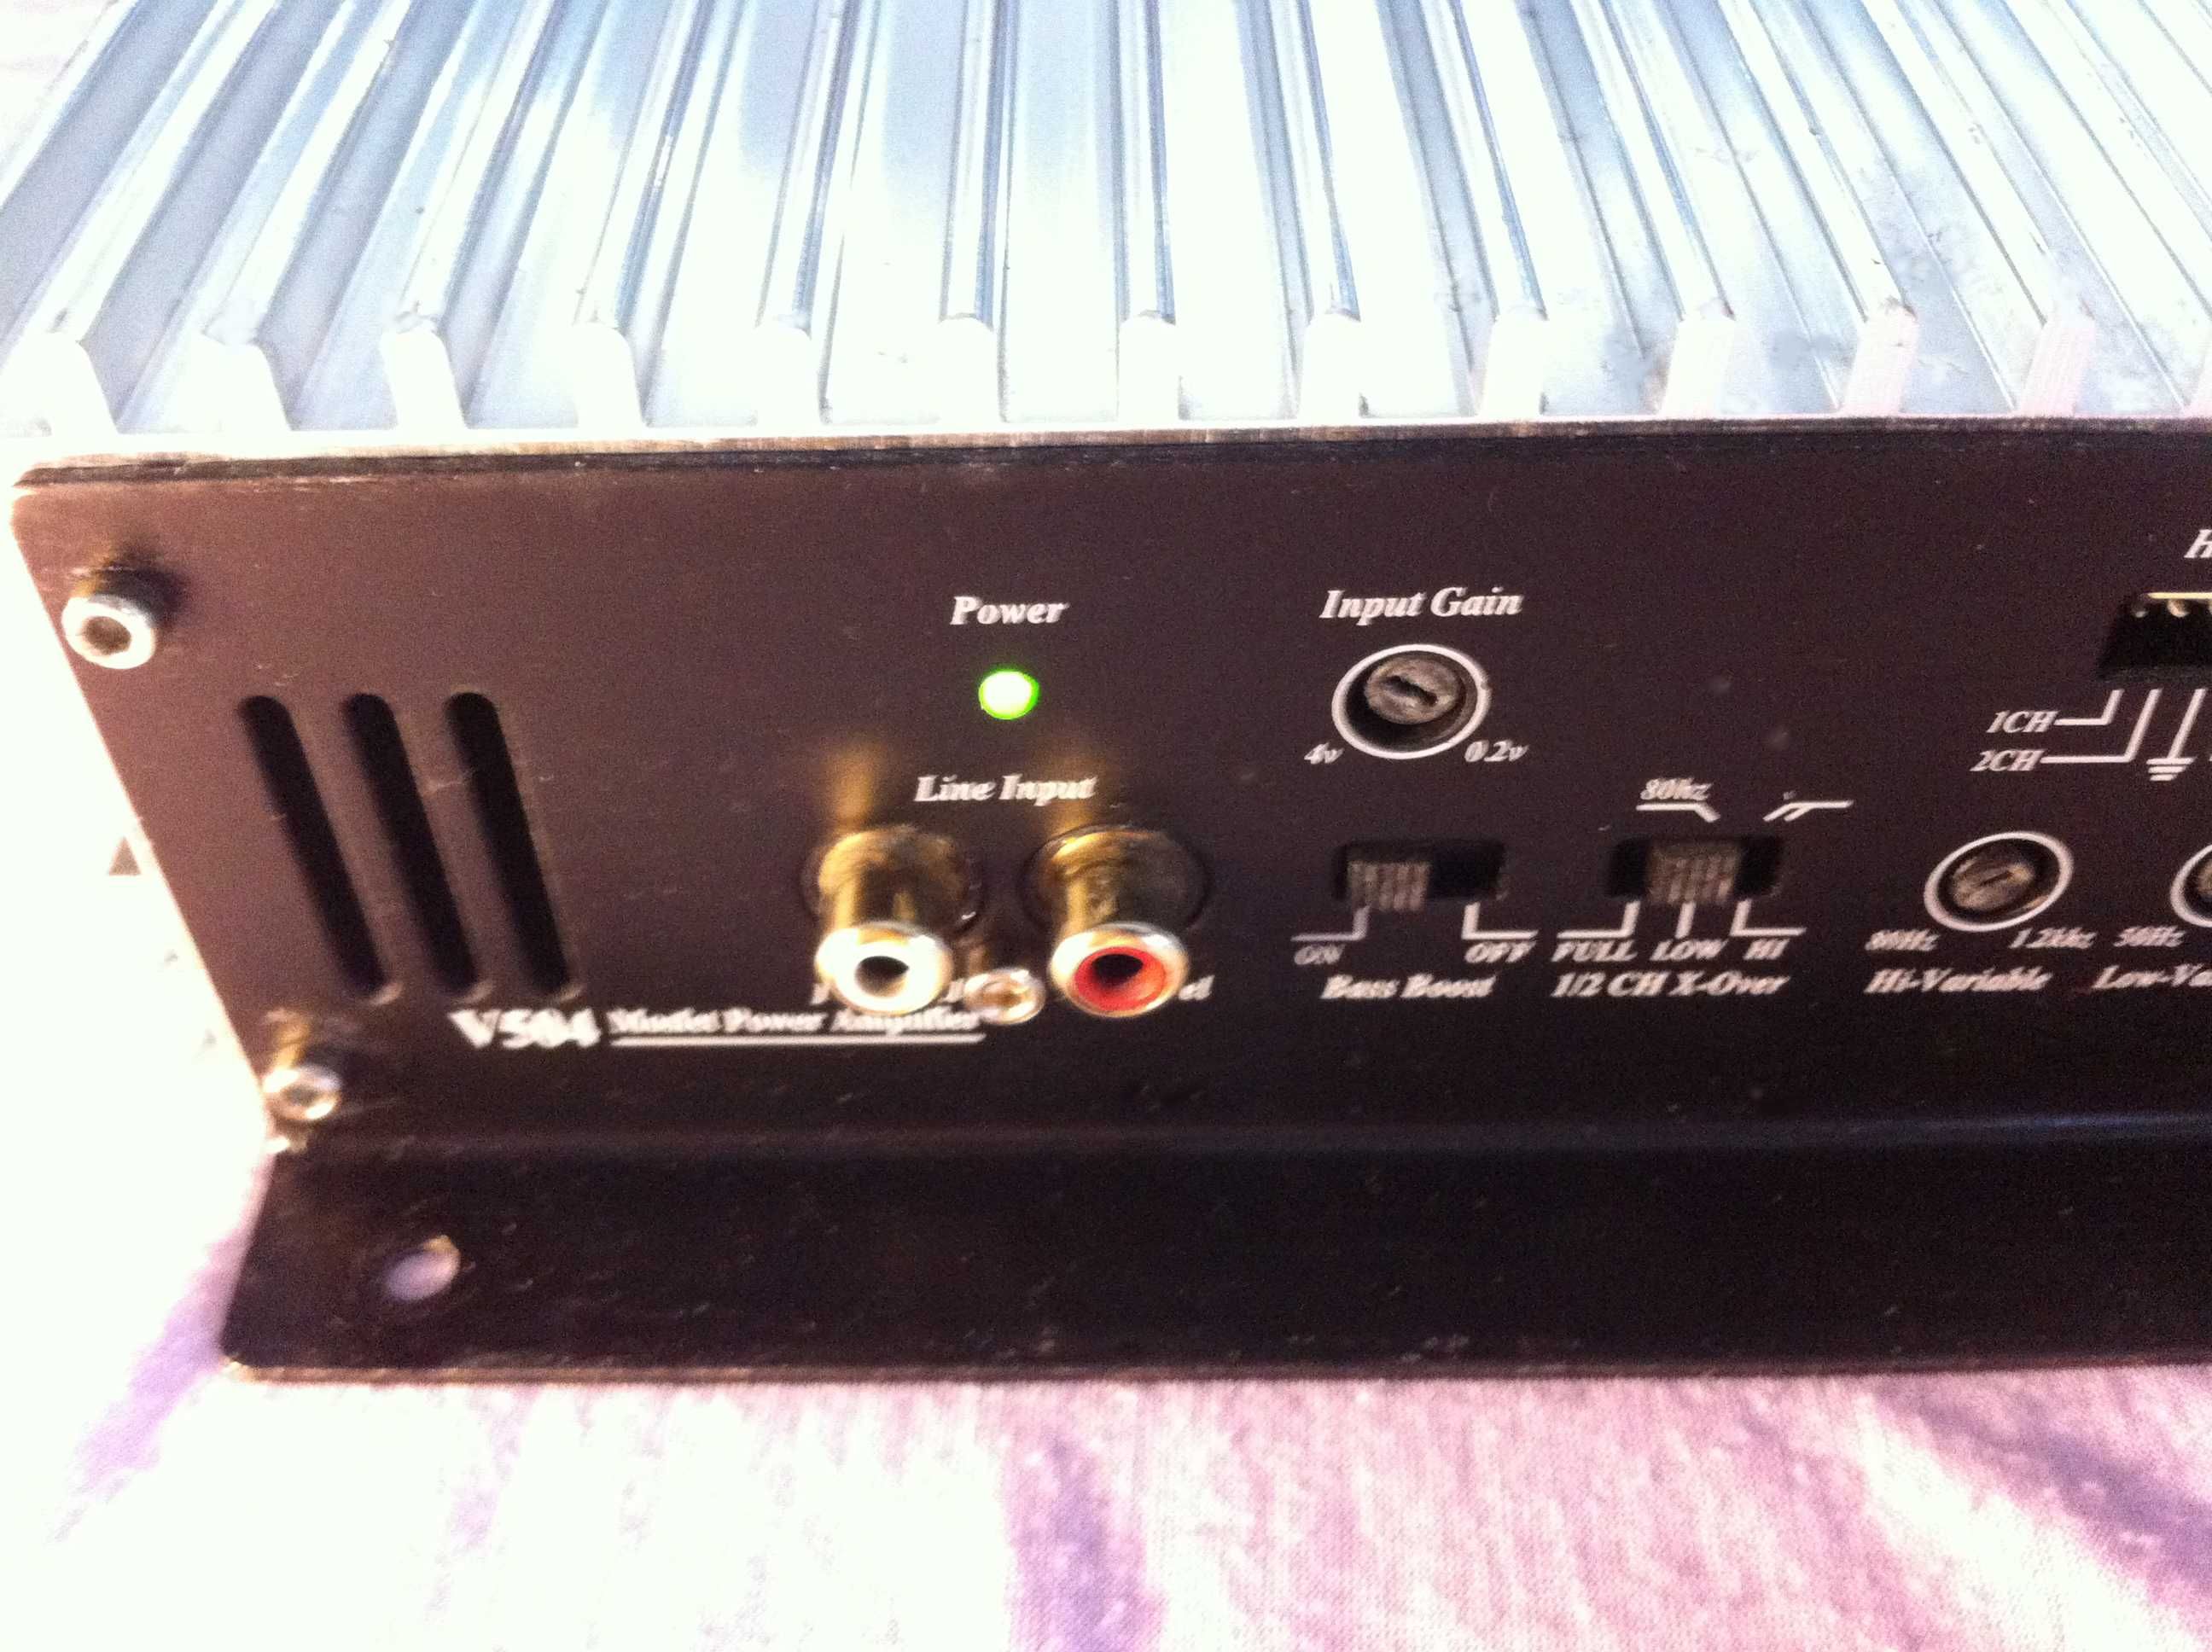 Amplificator Esx Vision 900W pioneer hertz focal audison statie